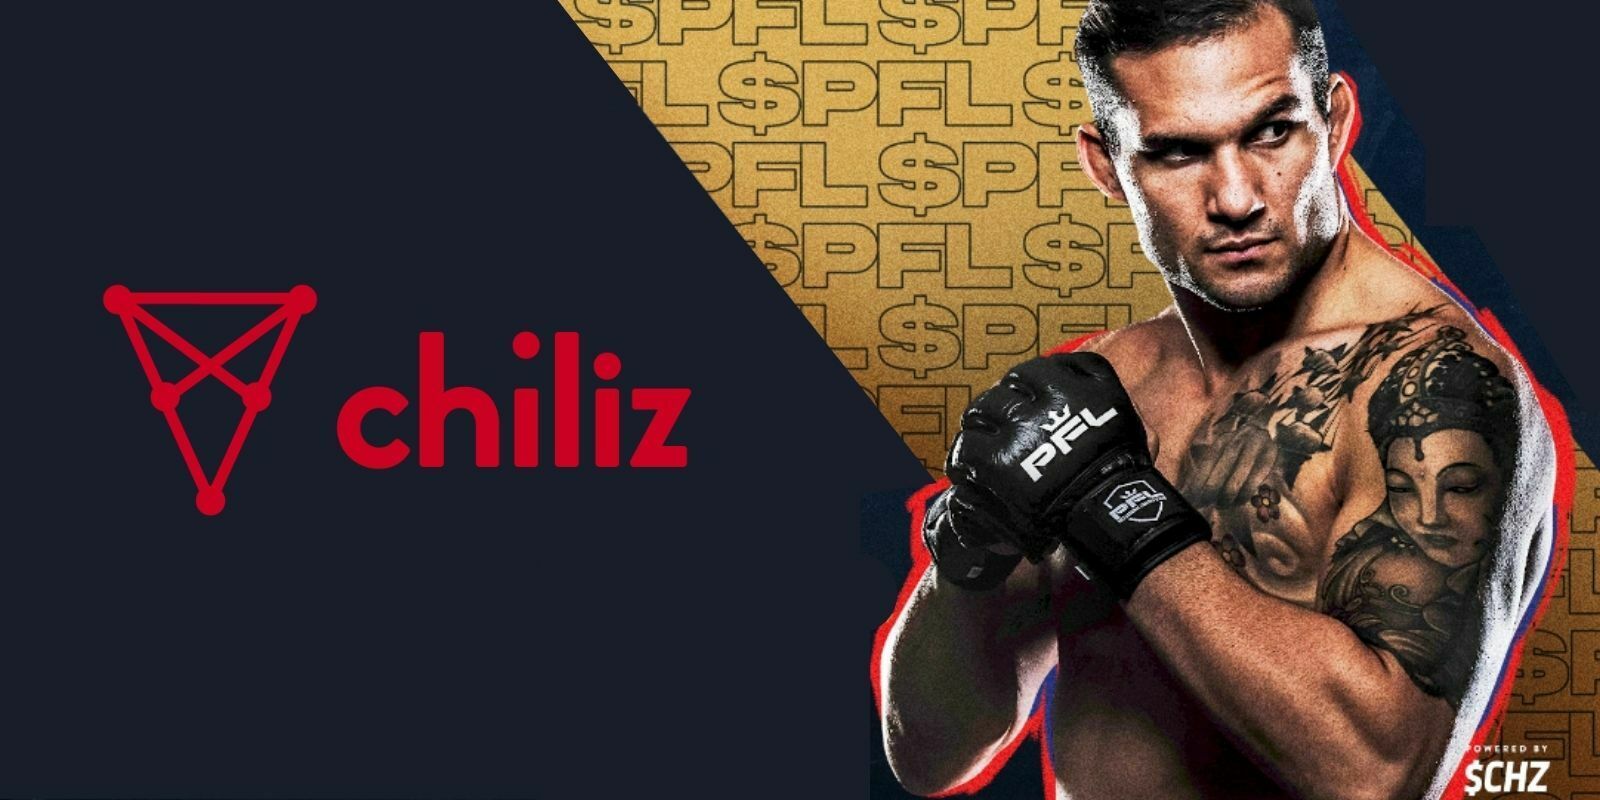 La Professional Fighters League (PFL) lance son fan token en s’associant avec Chiliz (CHZ)